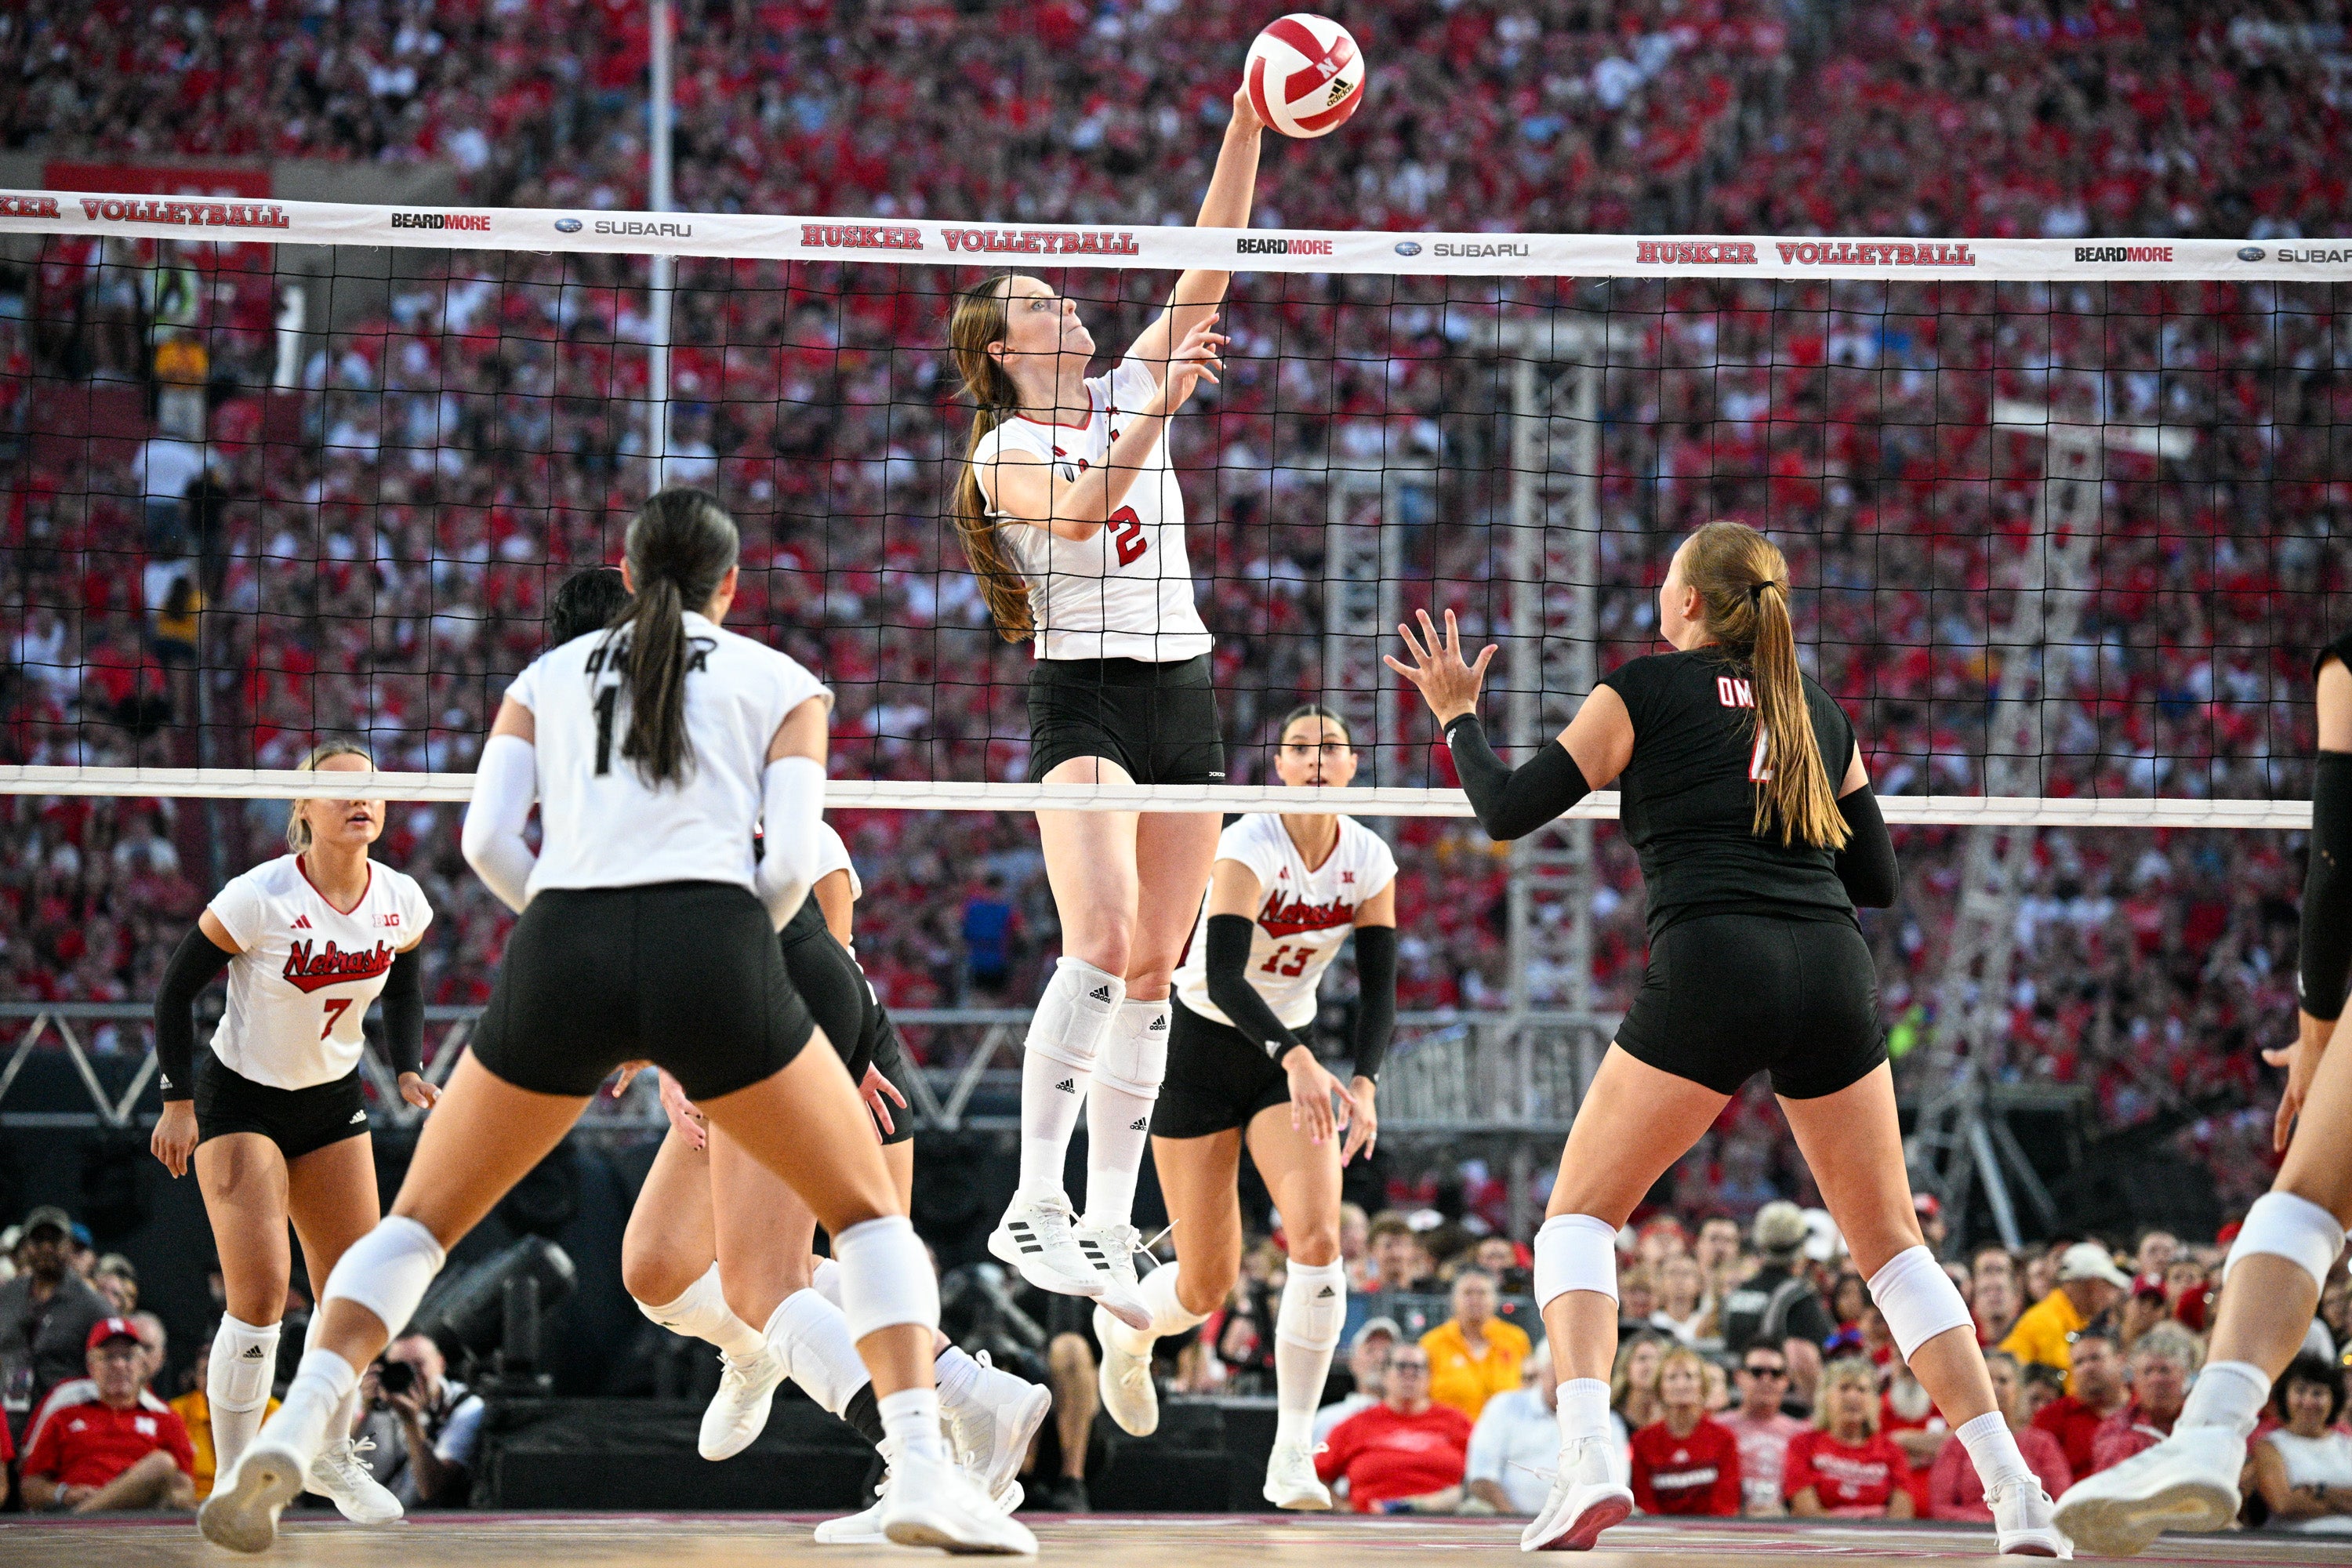 “Volleyball Day in Nebraska” broke the world record for attendance in Women’s Sport